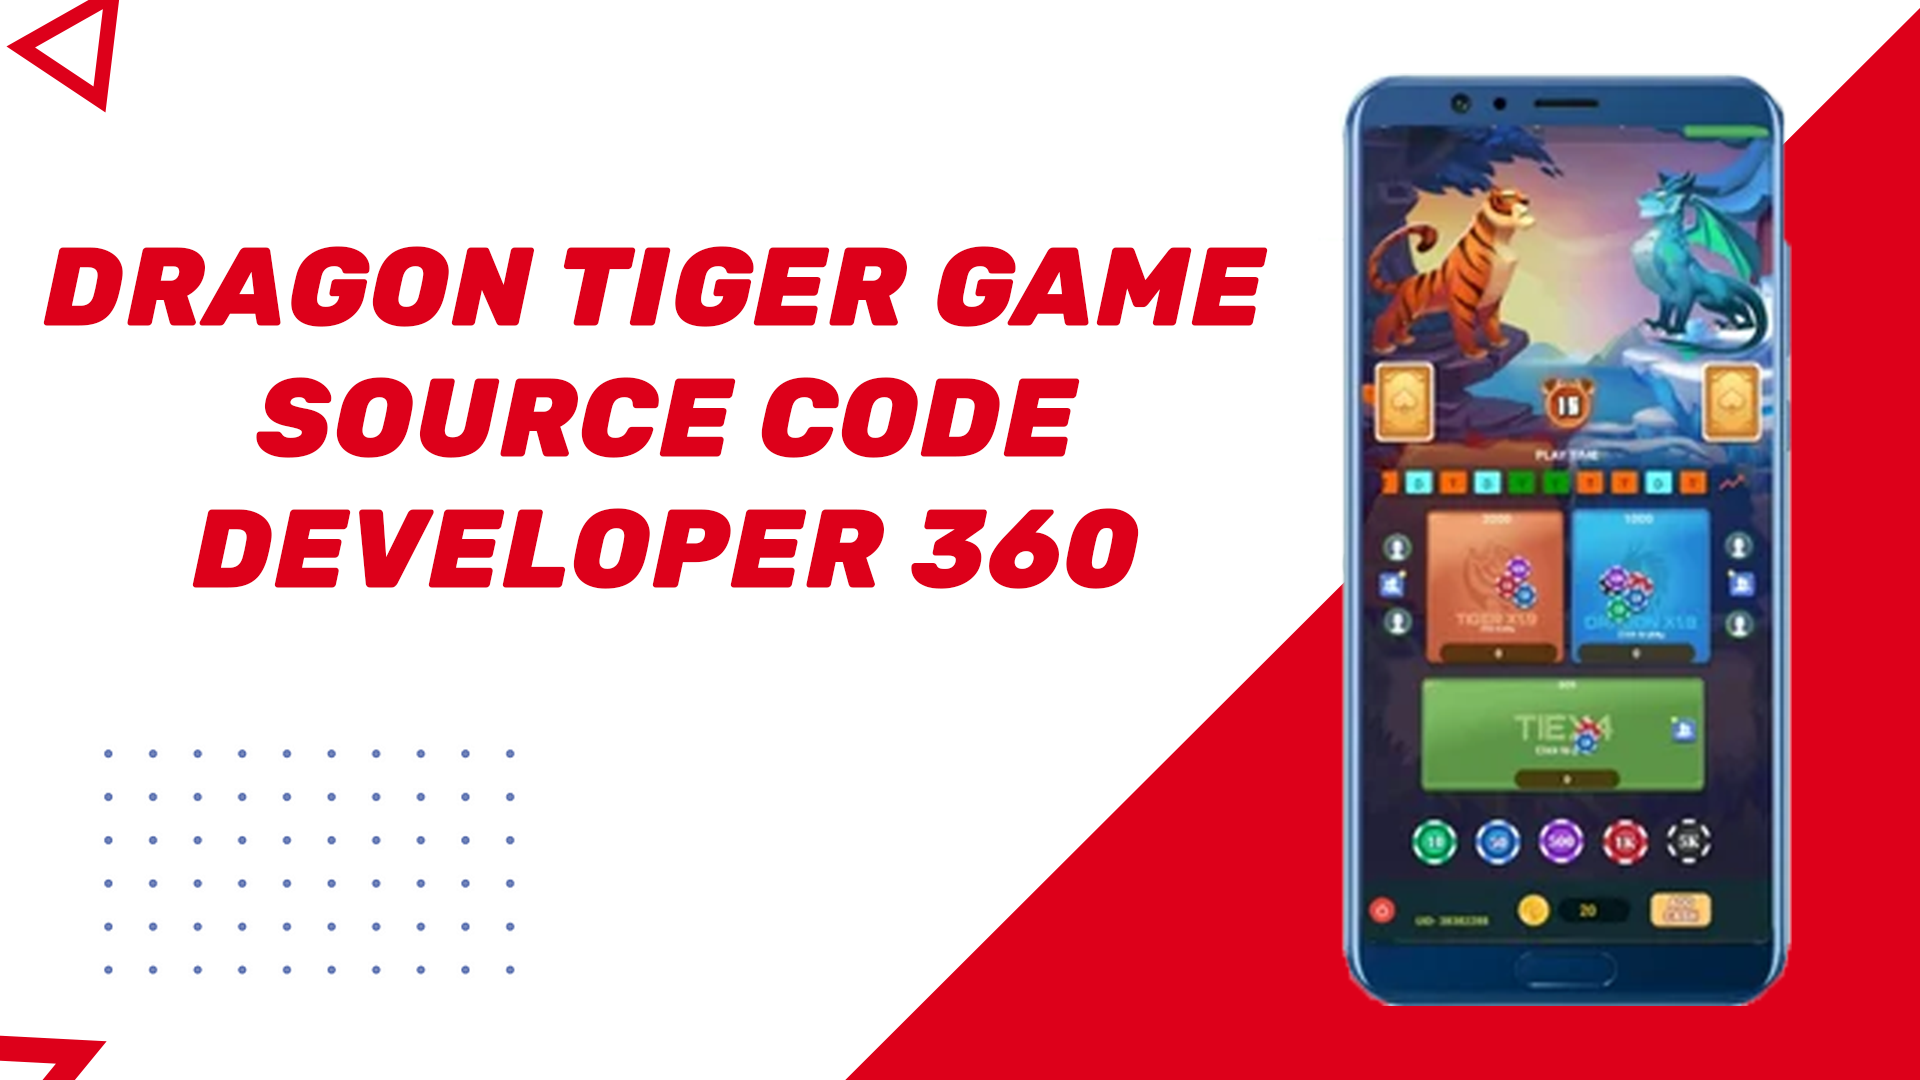 Dragon Tiger Game Source Code - Developer 360